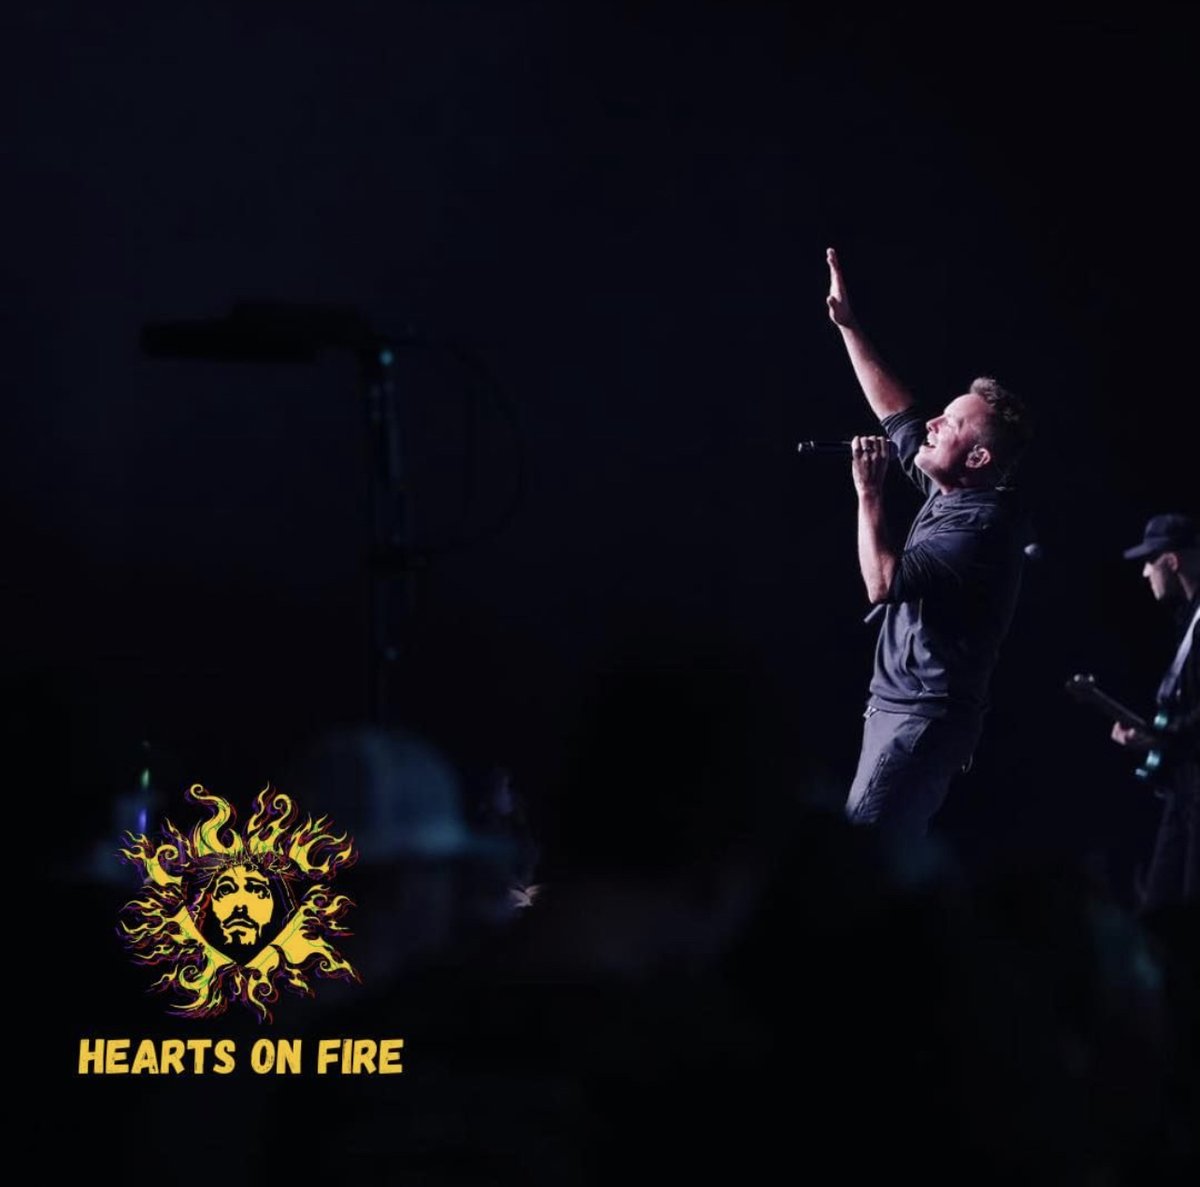 Hearts On Fire 2023 ❤️‍🔥
See Details + Register HERE -  bit.ly/3WJpCTD 🥳

#iTickets #ExperiencesStartHere #heartsonfire #partnerspotlight